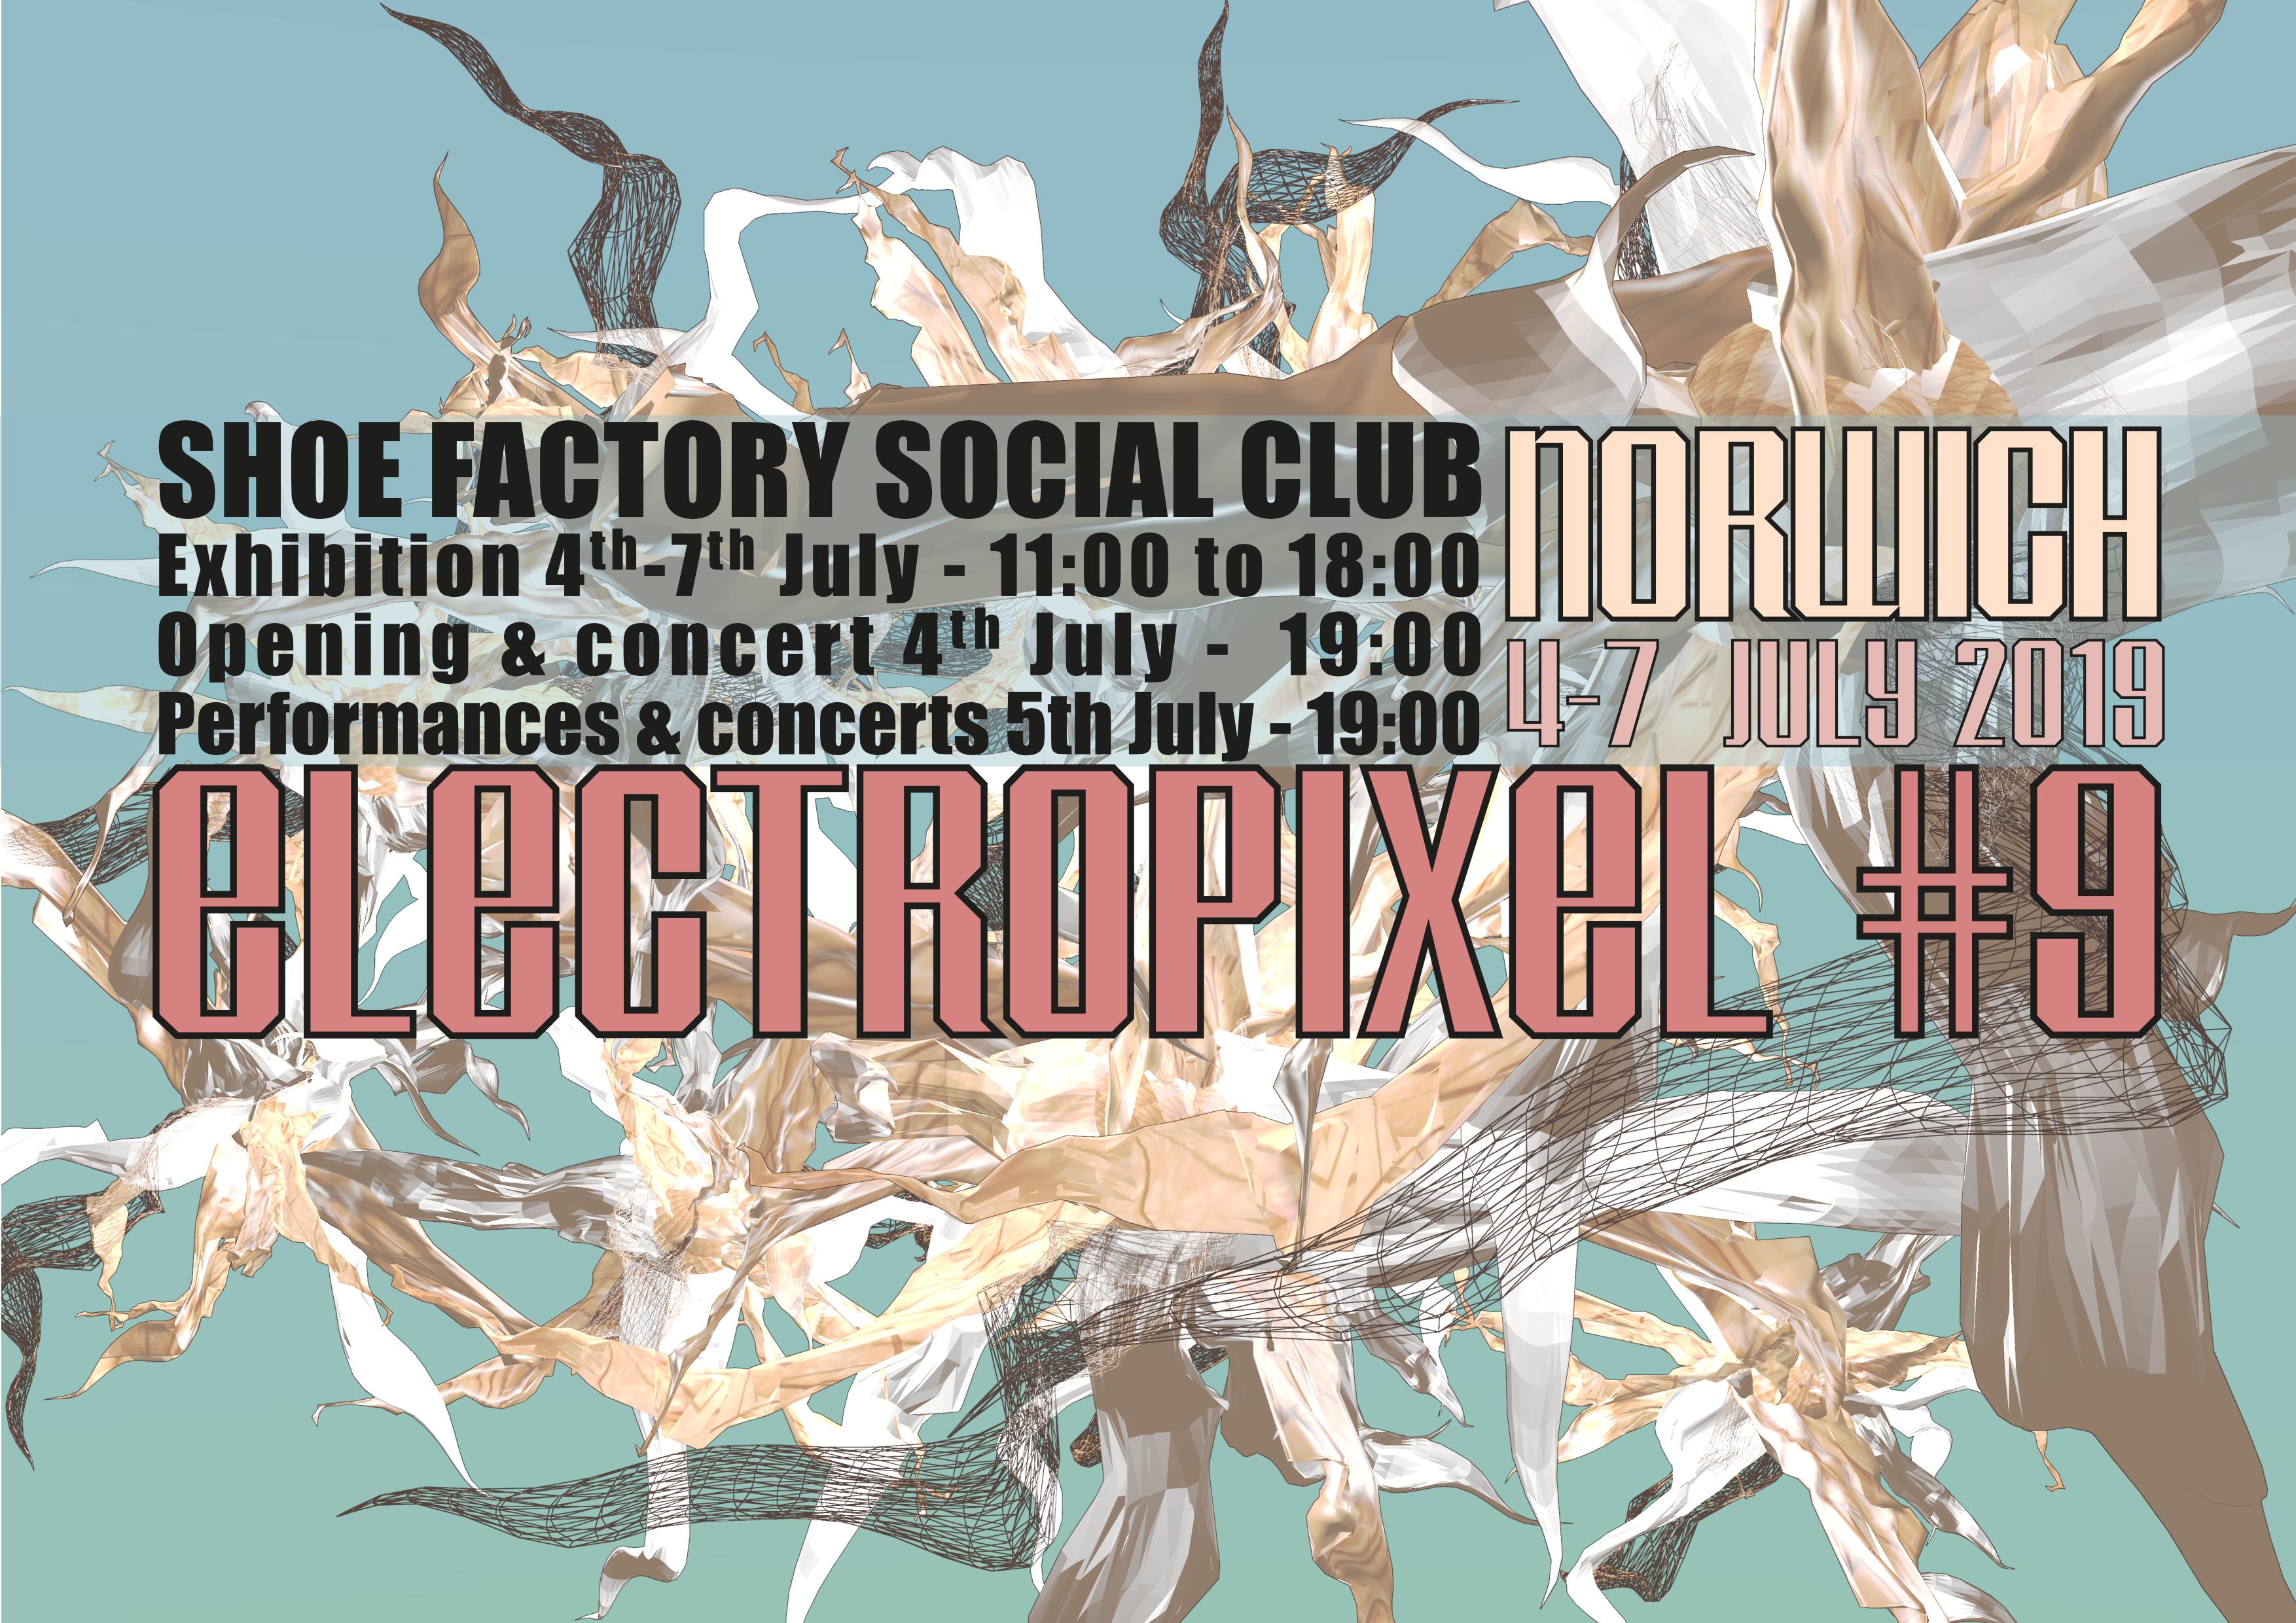 Festival Electropixel #9 – du 2 juillet au 7 juillet